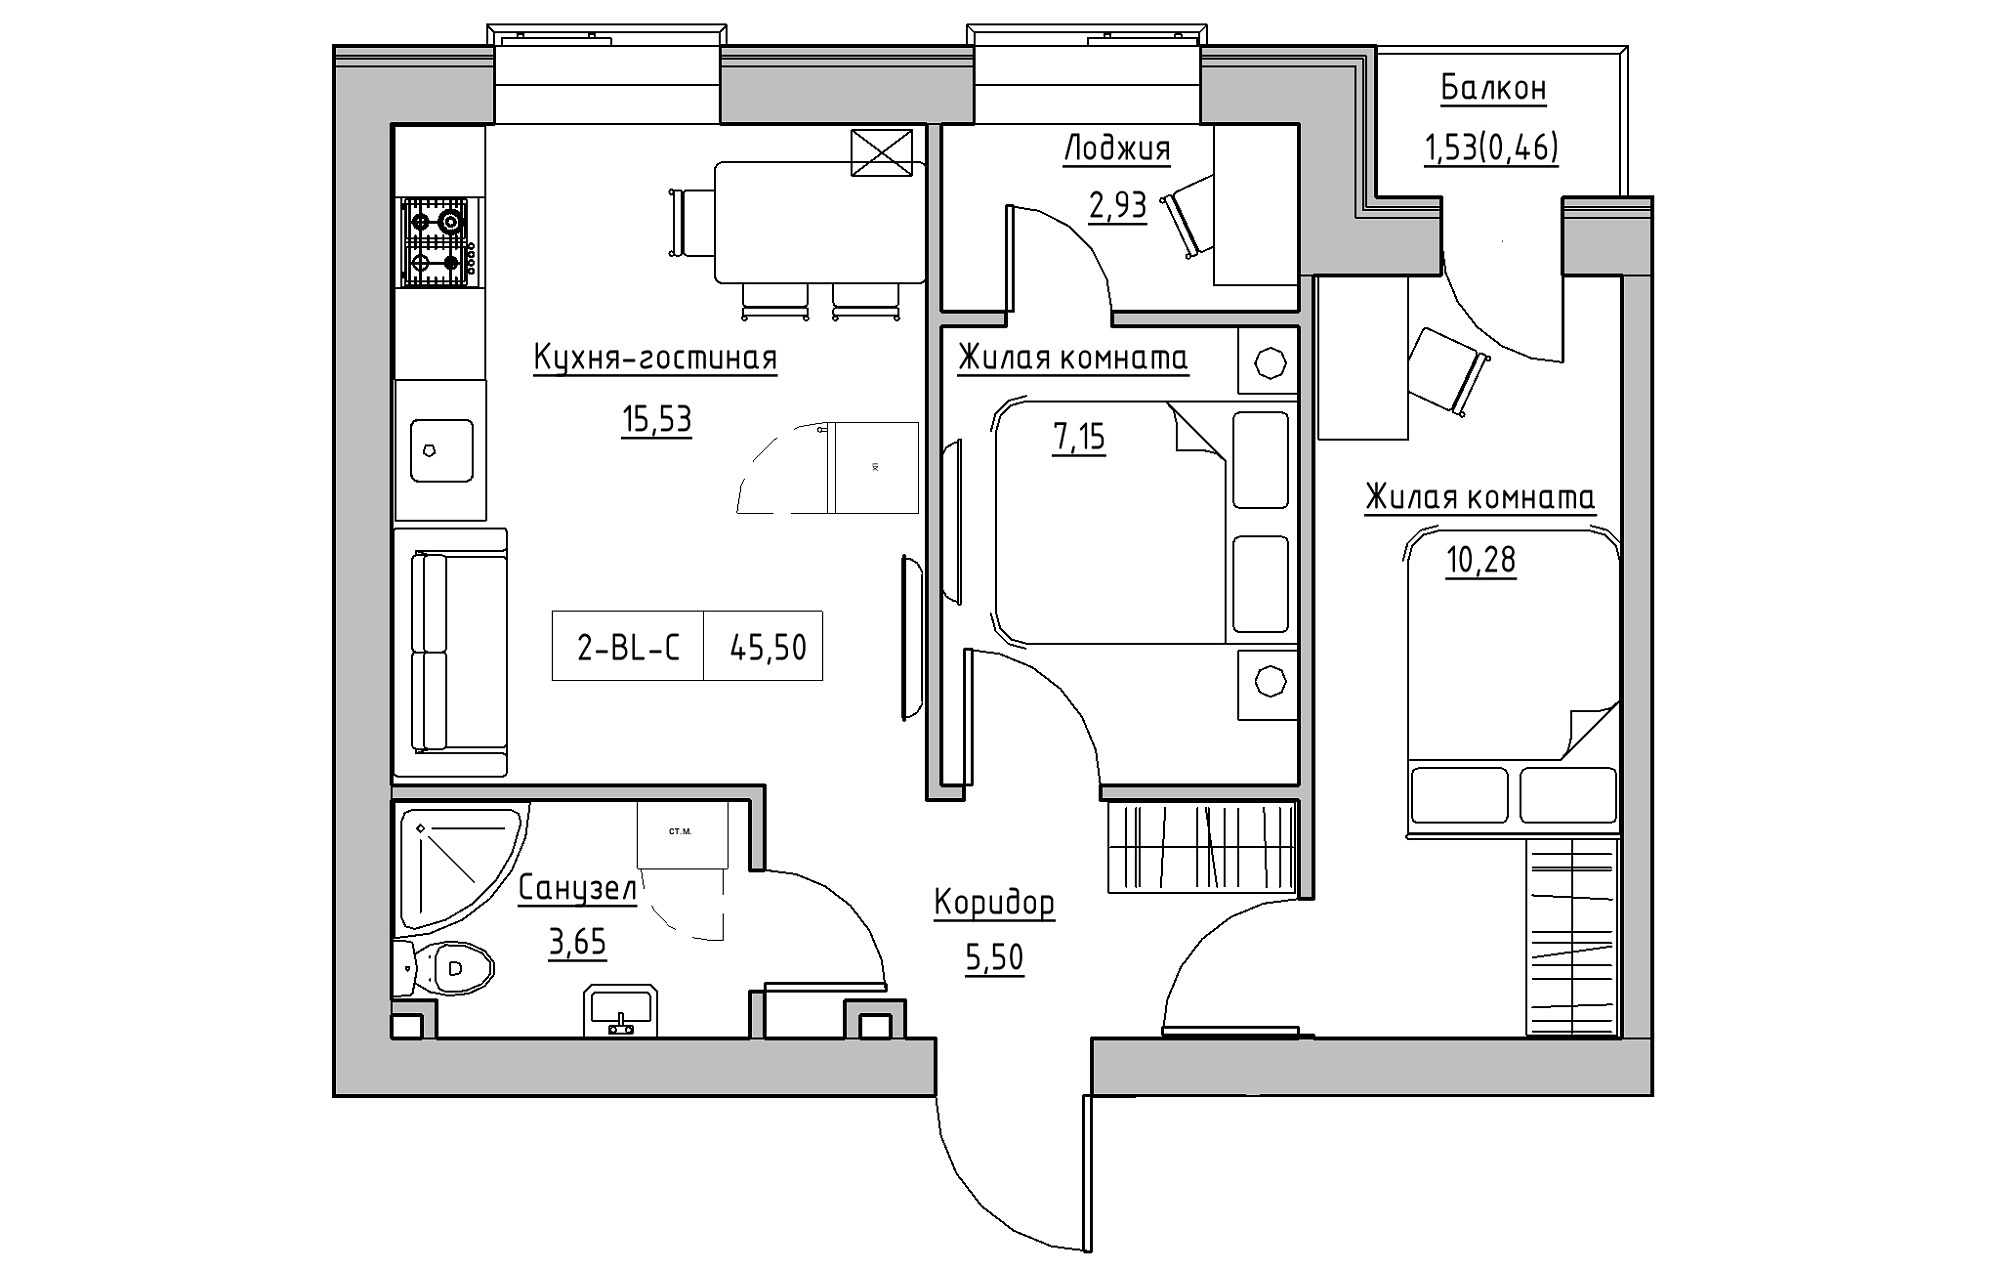 Planning 2-rm flats area 45.5m2, KS-018-02/0008.